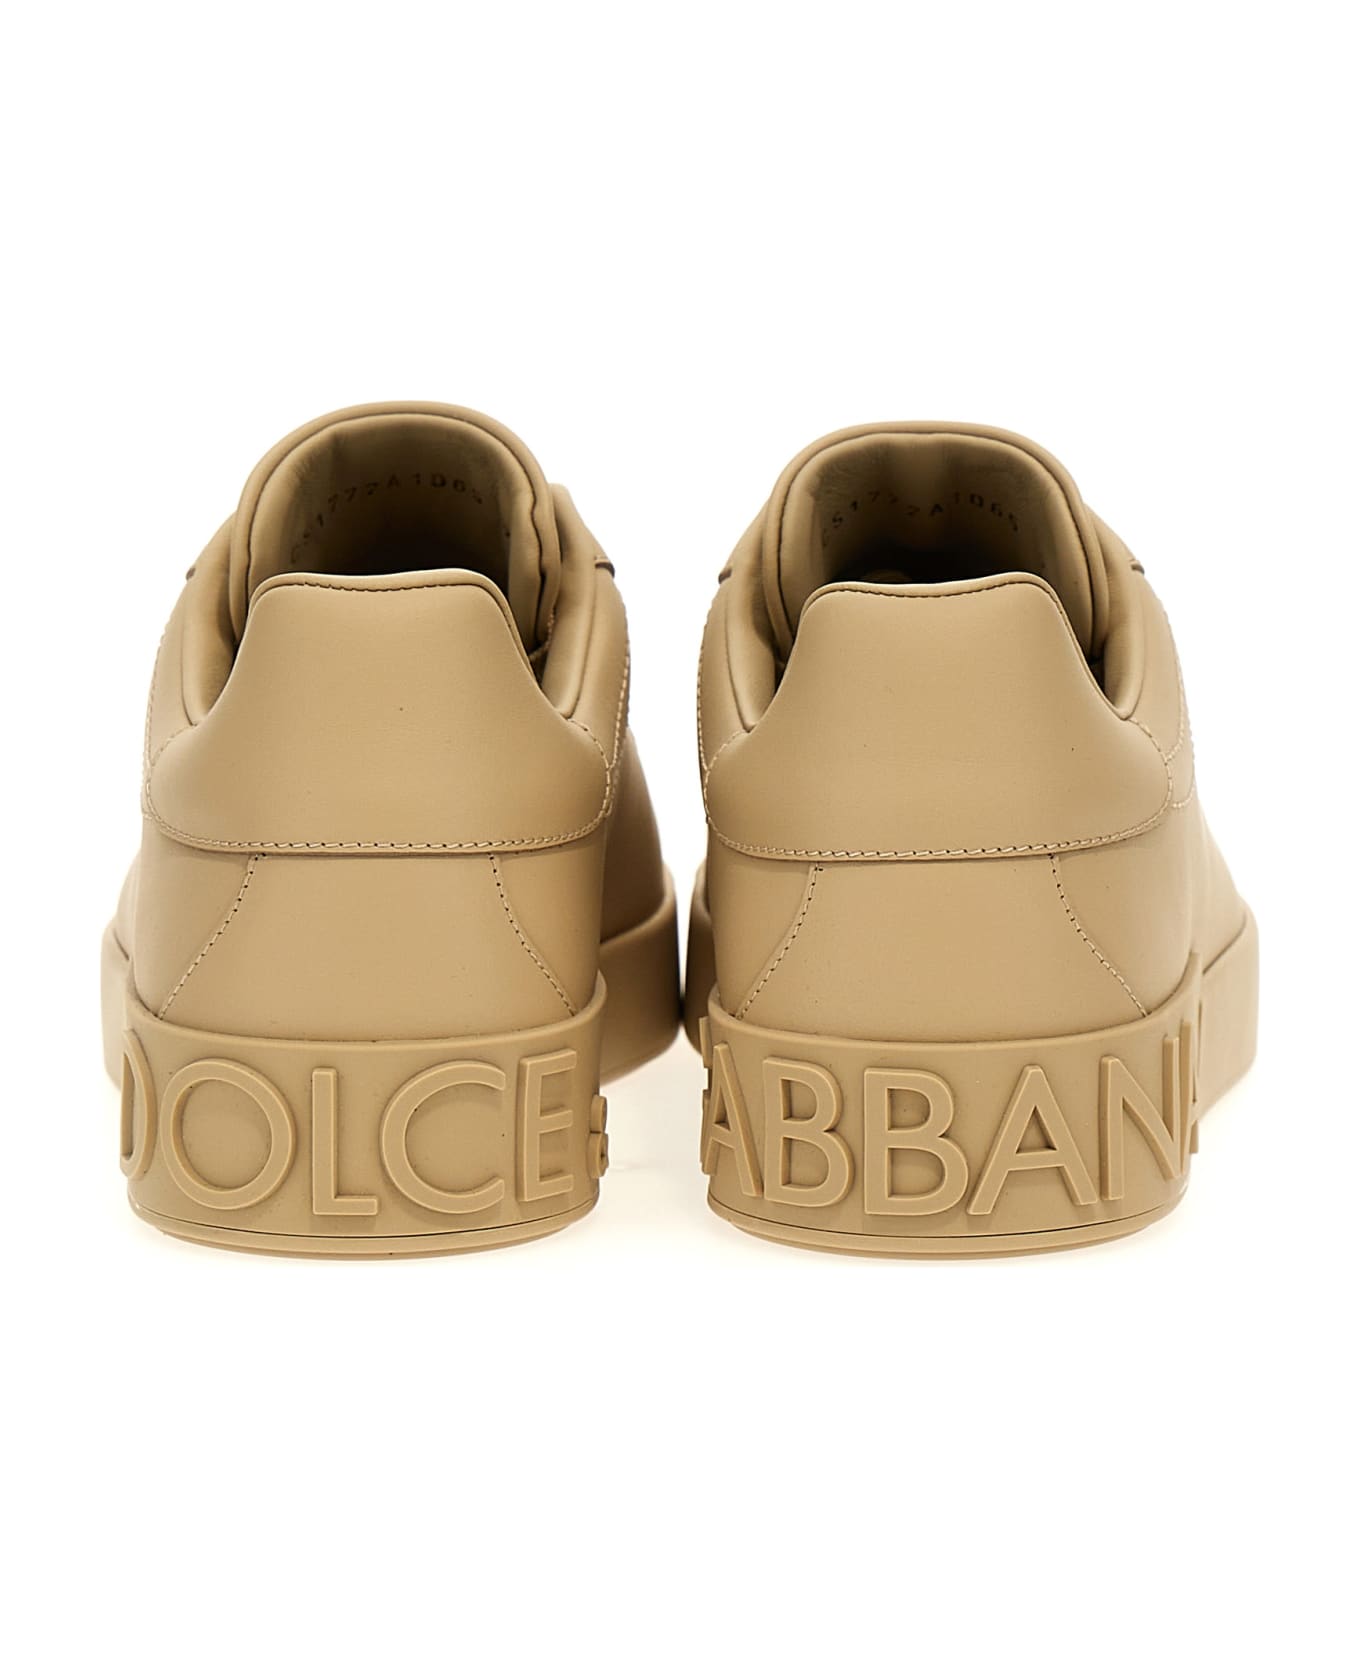 Dolce & Gabbana Portofino Leather Lace-up Sneakers - Beige